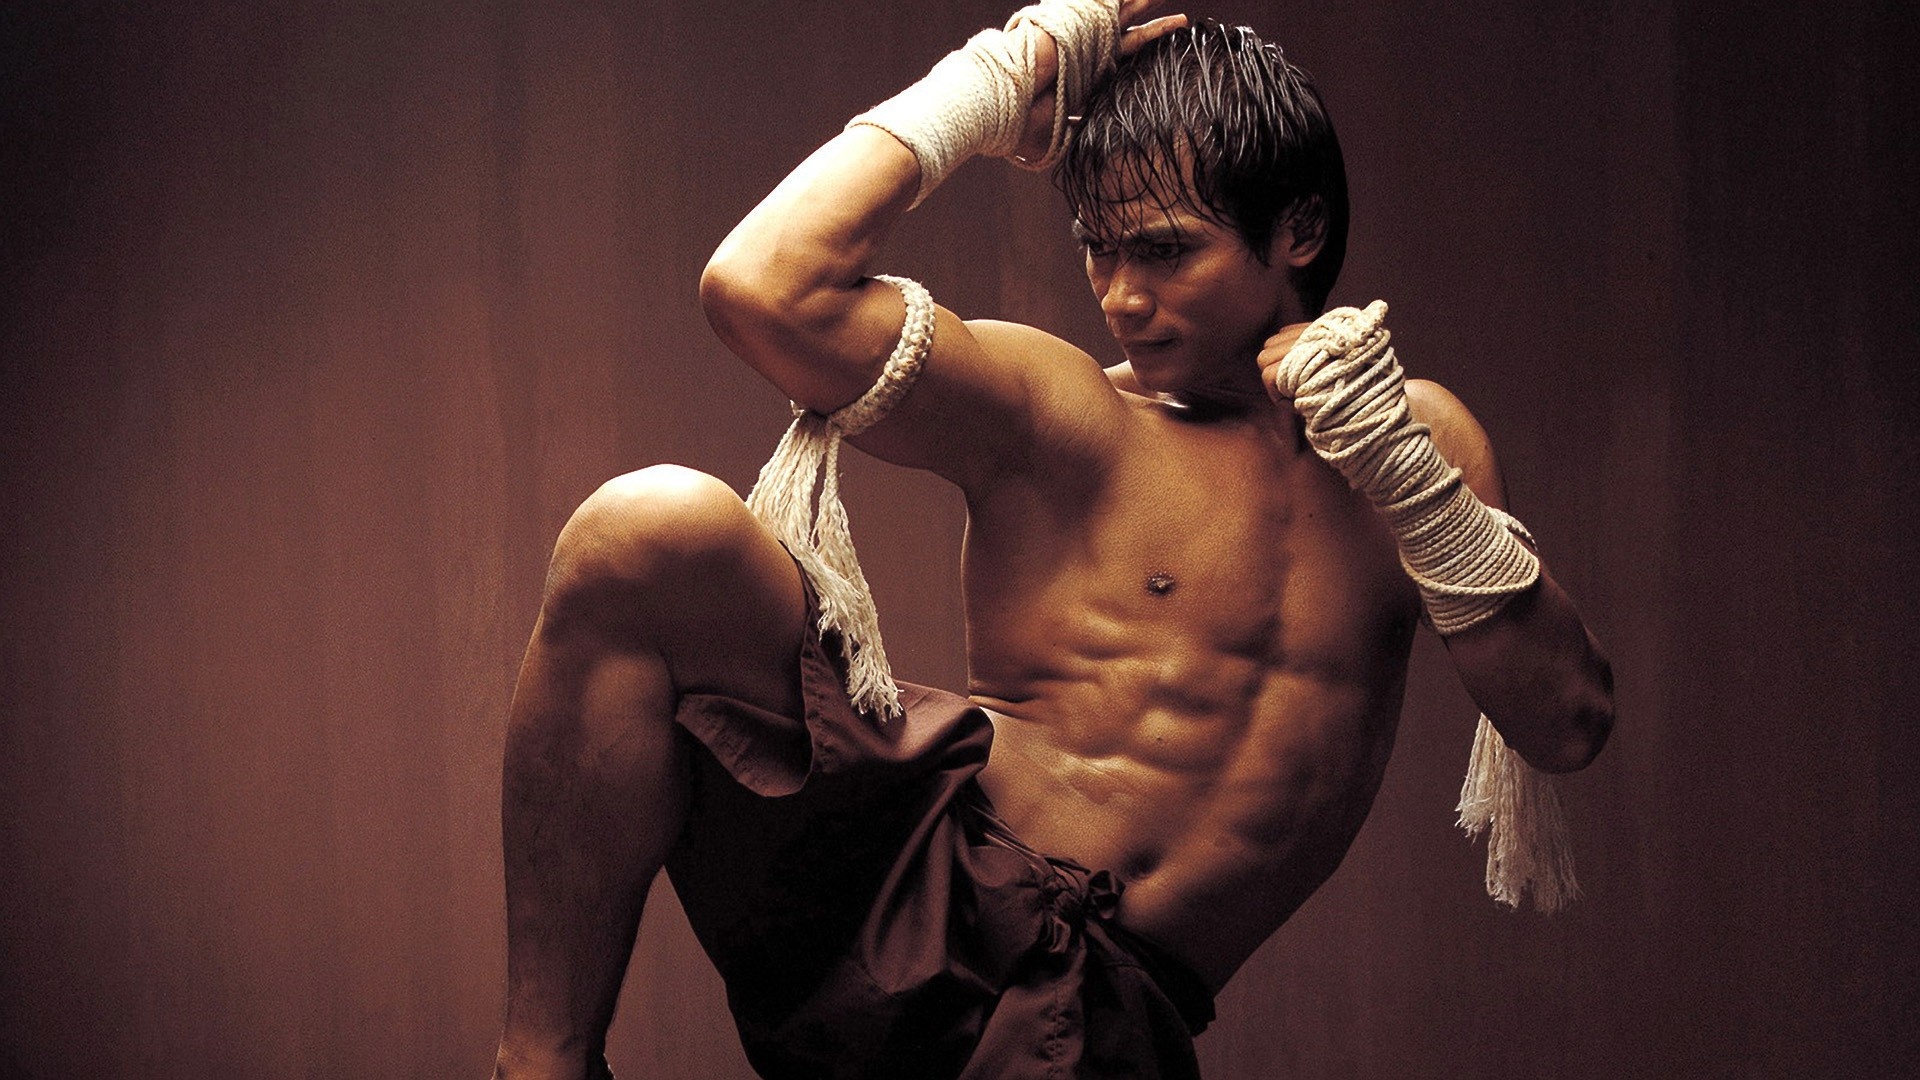 Muay Thai: Tony Jaa, Ong-Bak: Muay Thai Warrior, A film by EuropaCorp production company. 1920x1080 Full HD Background.